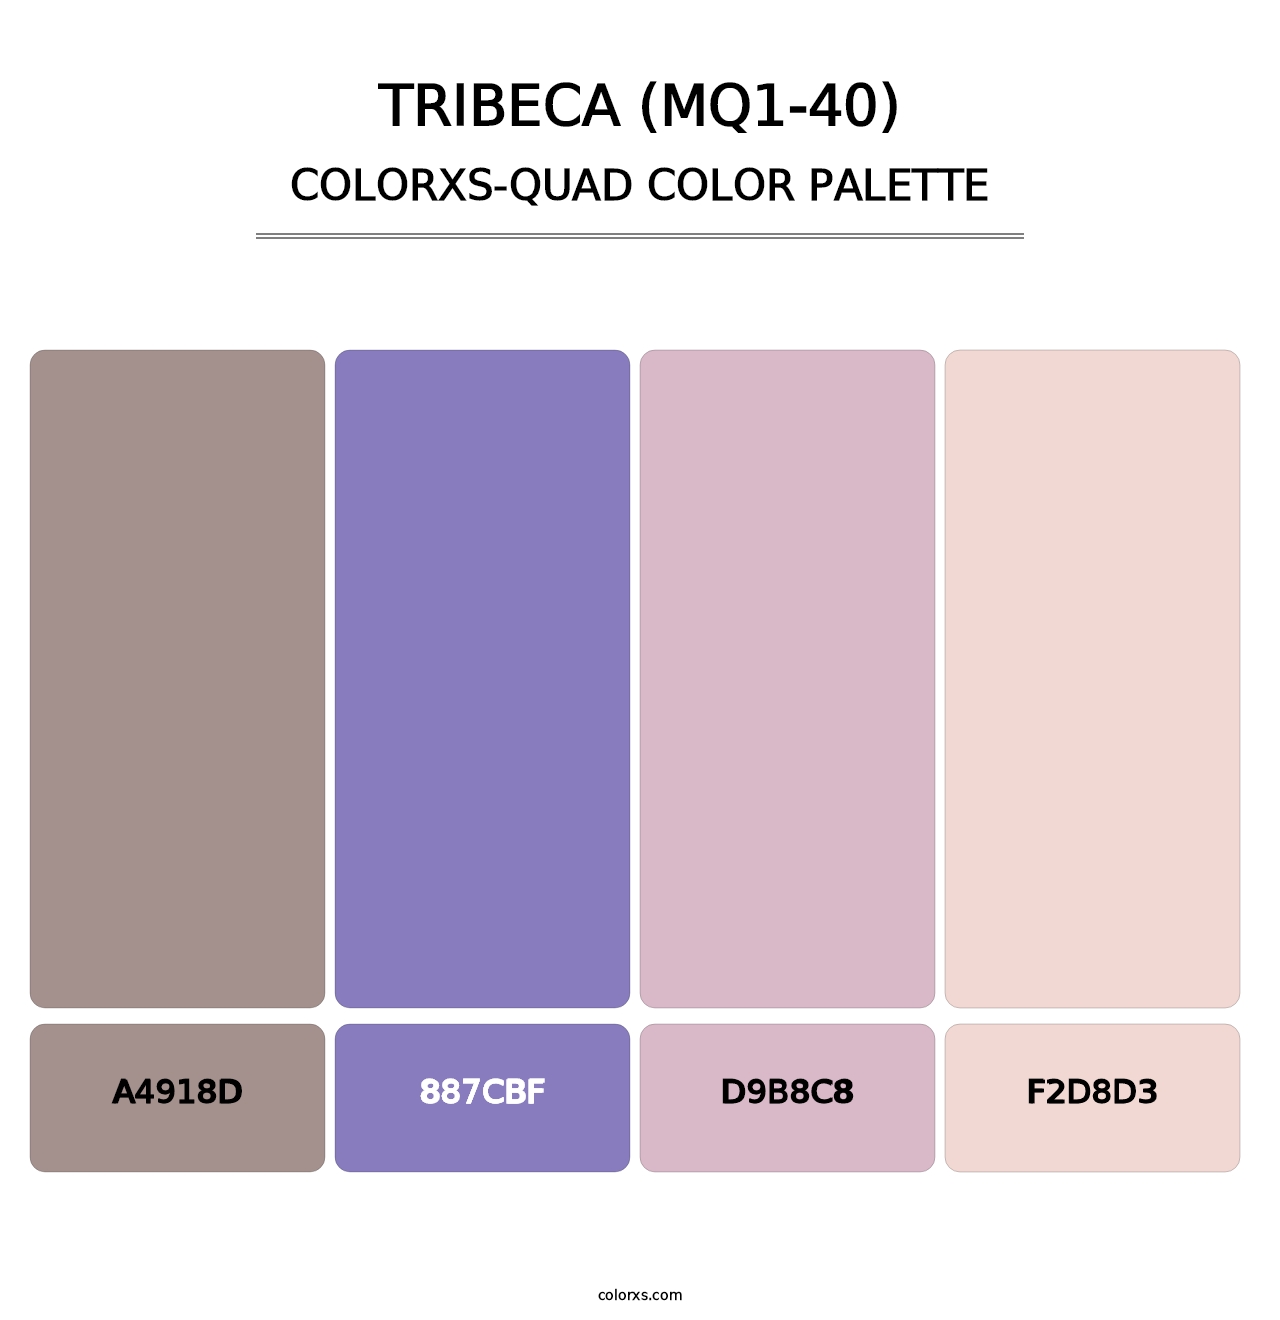 Tribeca (MQ1-40) - Colorxs Quad Palette